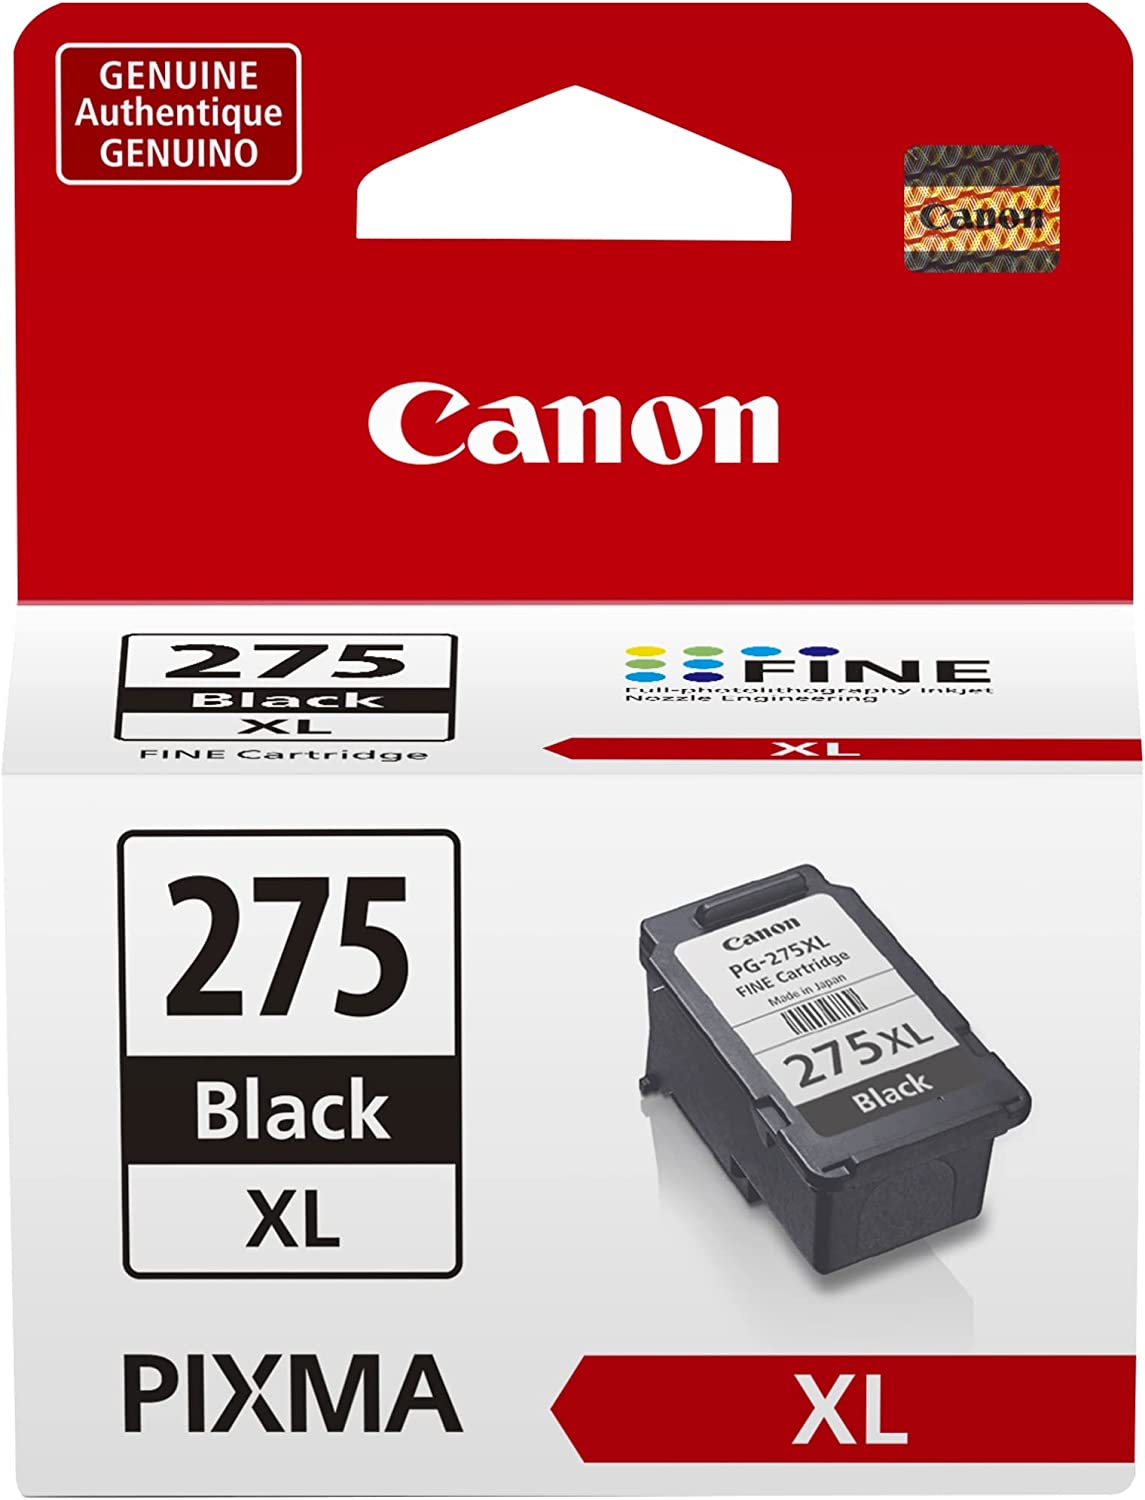 Canon PG-275XL 블랙 잉크 카트리지 PIXMATS3520 TS3522 및 TR4720 프린터와 호환